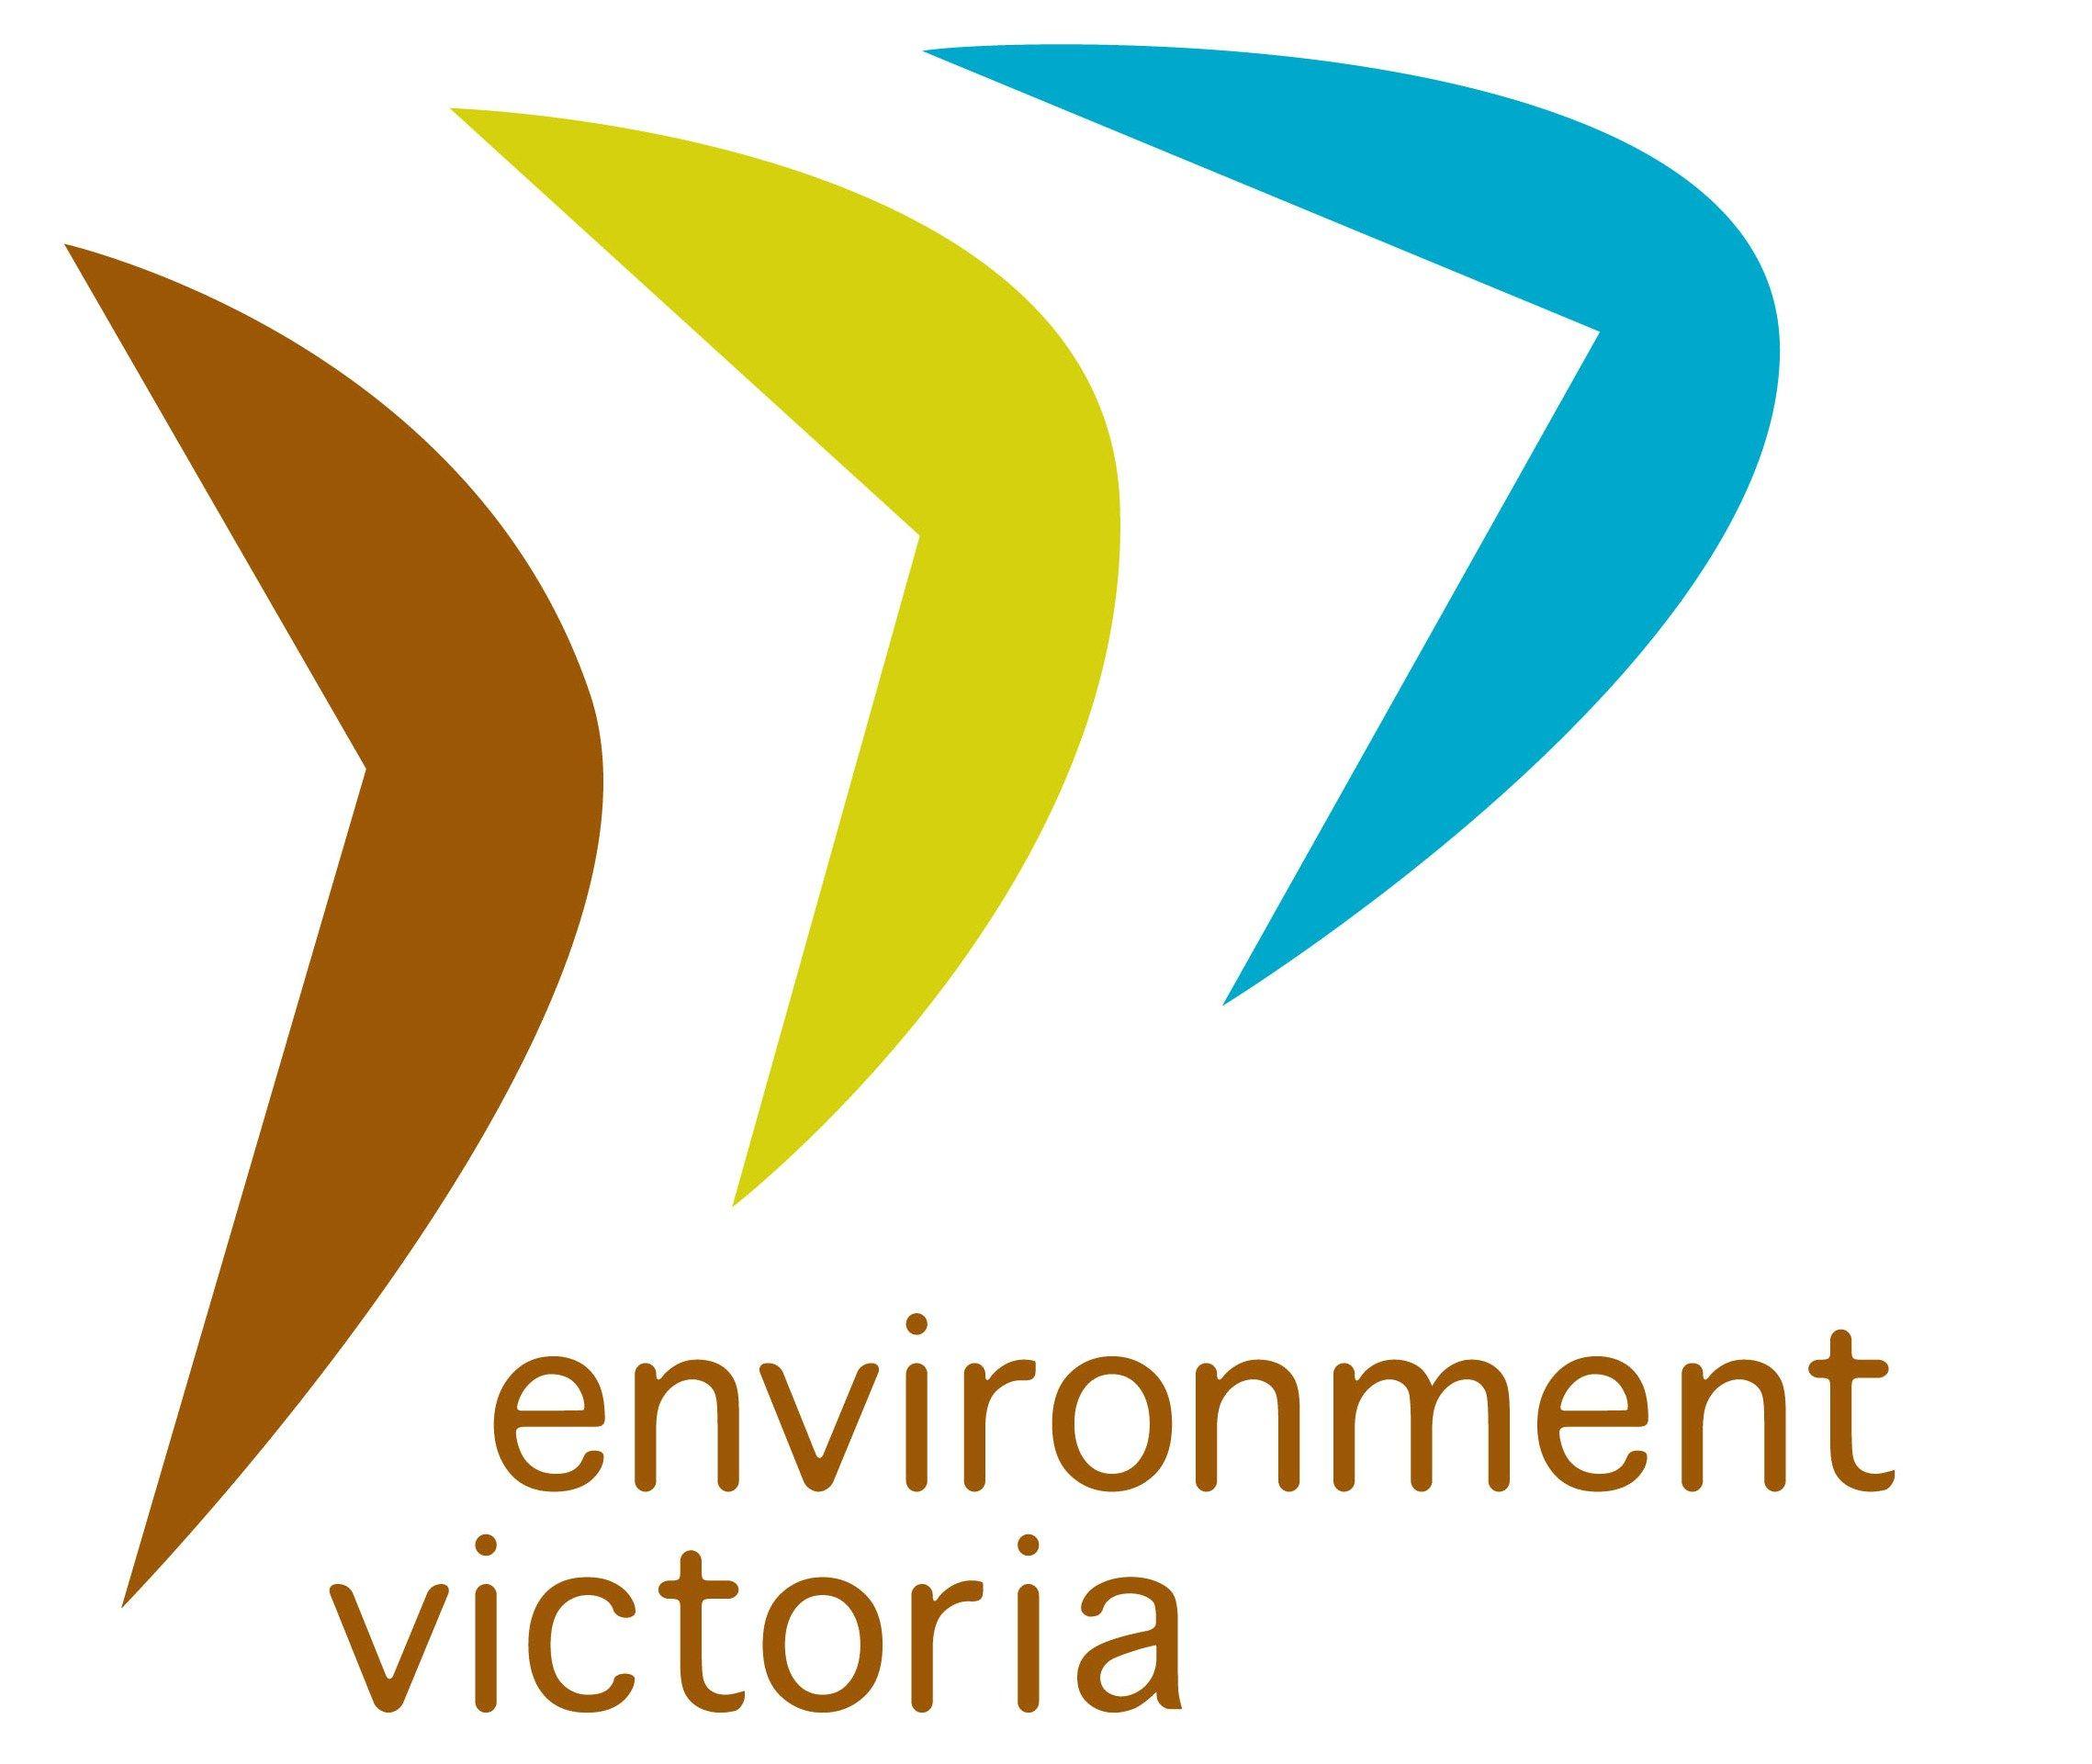 Victoria Logo - File:Environment Victoria Logo.jpg - Wikimedia Commons